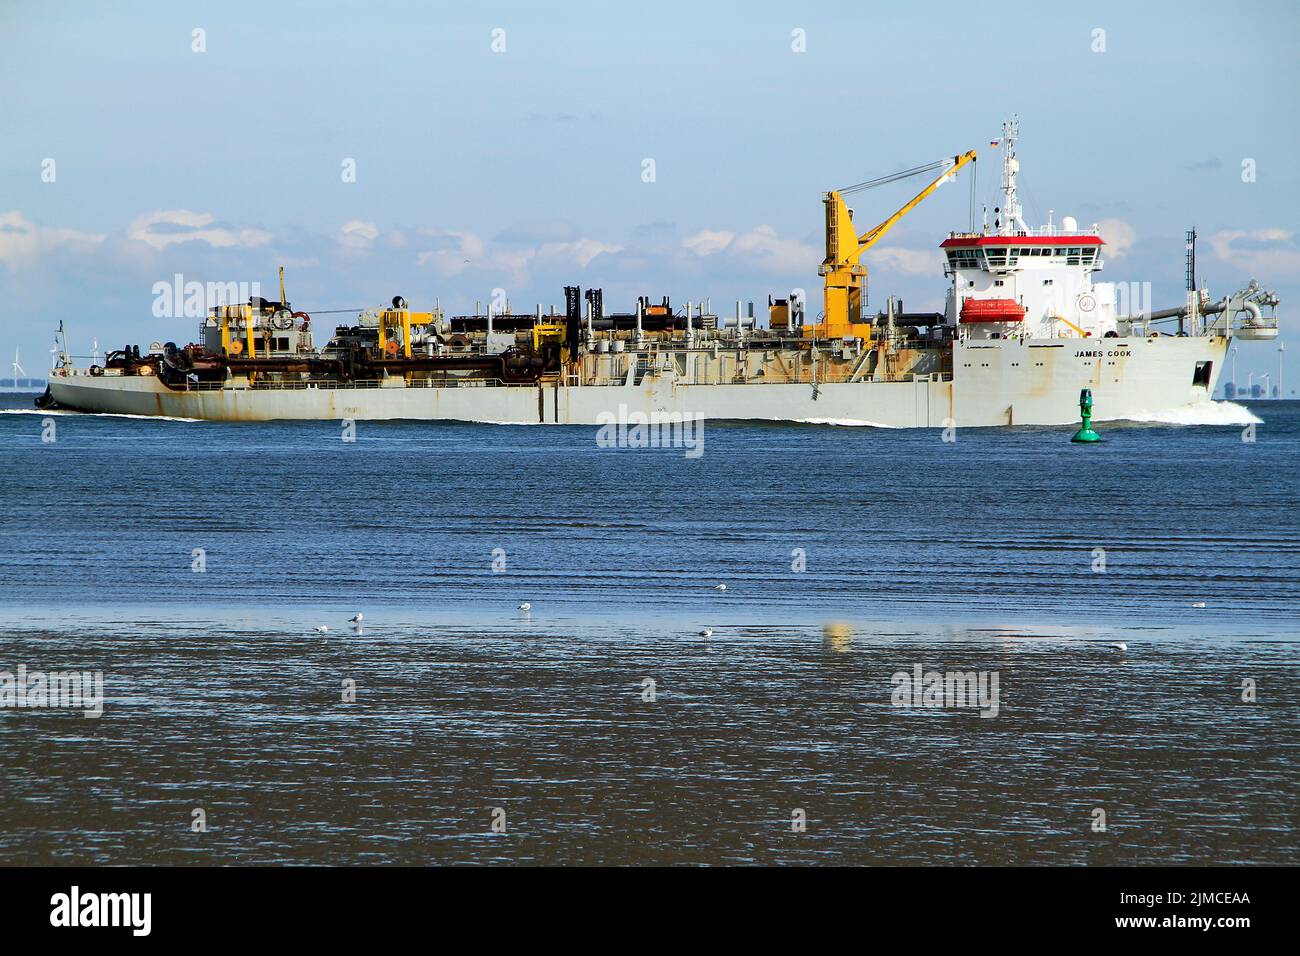 Excavator ship, James Cook, Fairway, Cuxhaven, Lower Saxony, Germany, Europe Stock Photo